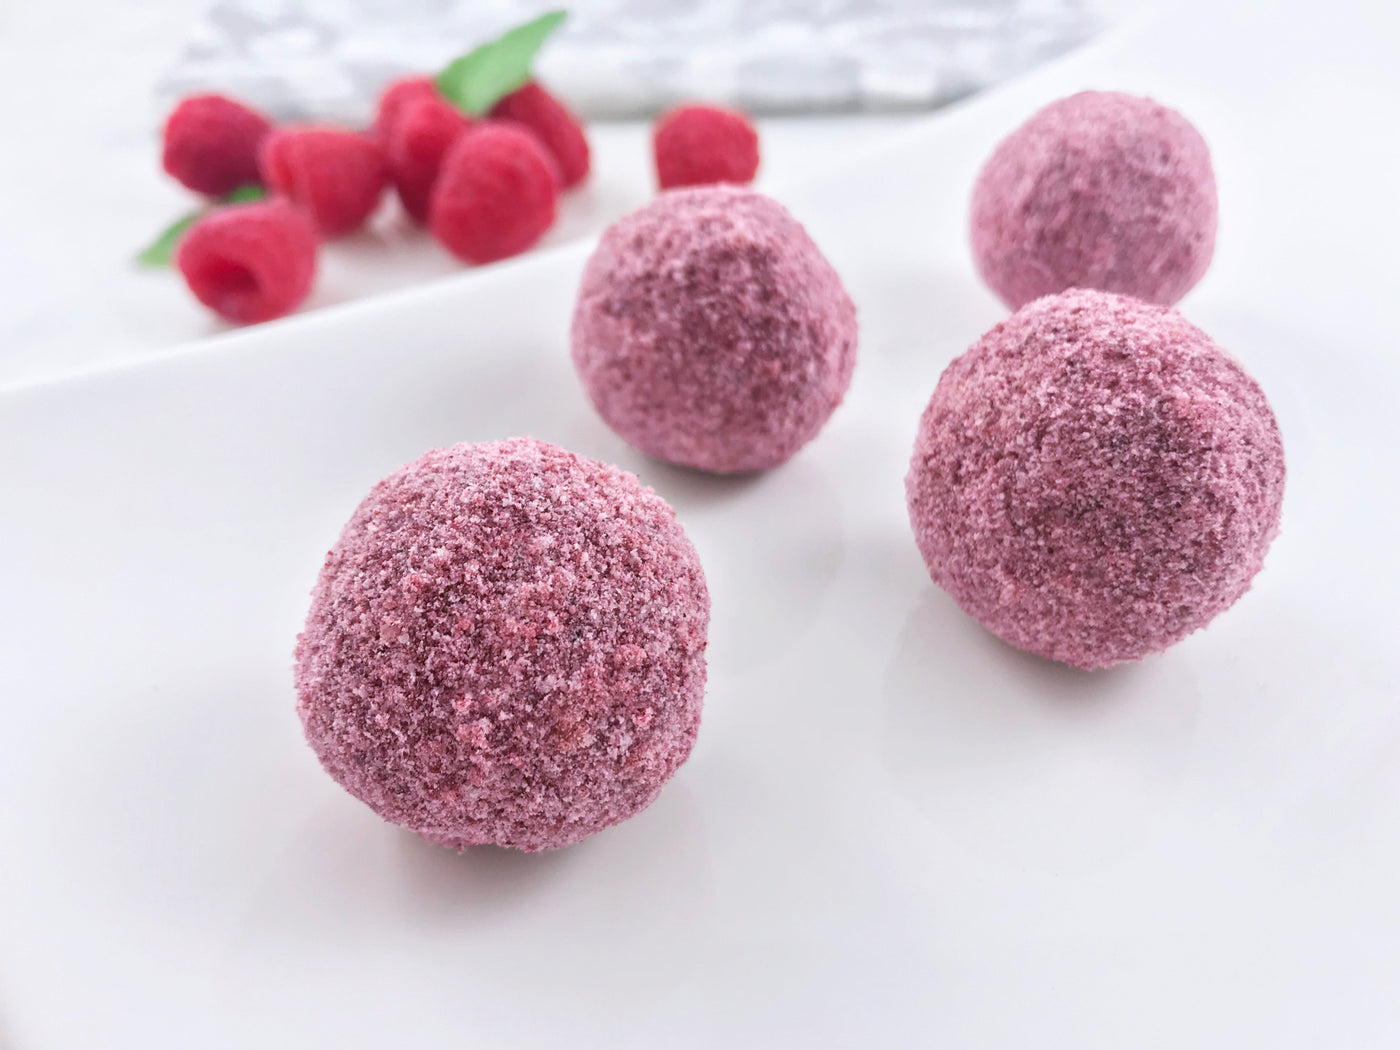 Keto Raspberry Balls Recipe